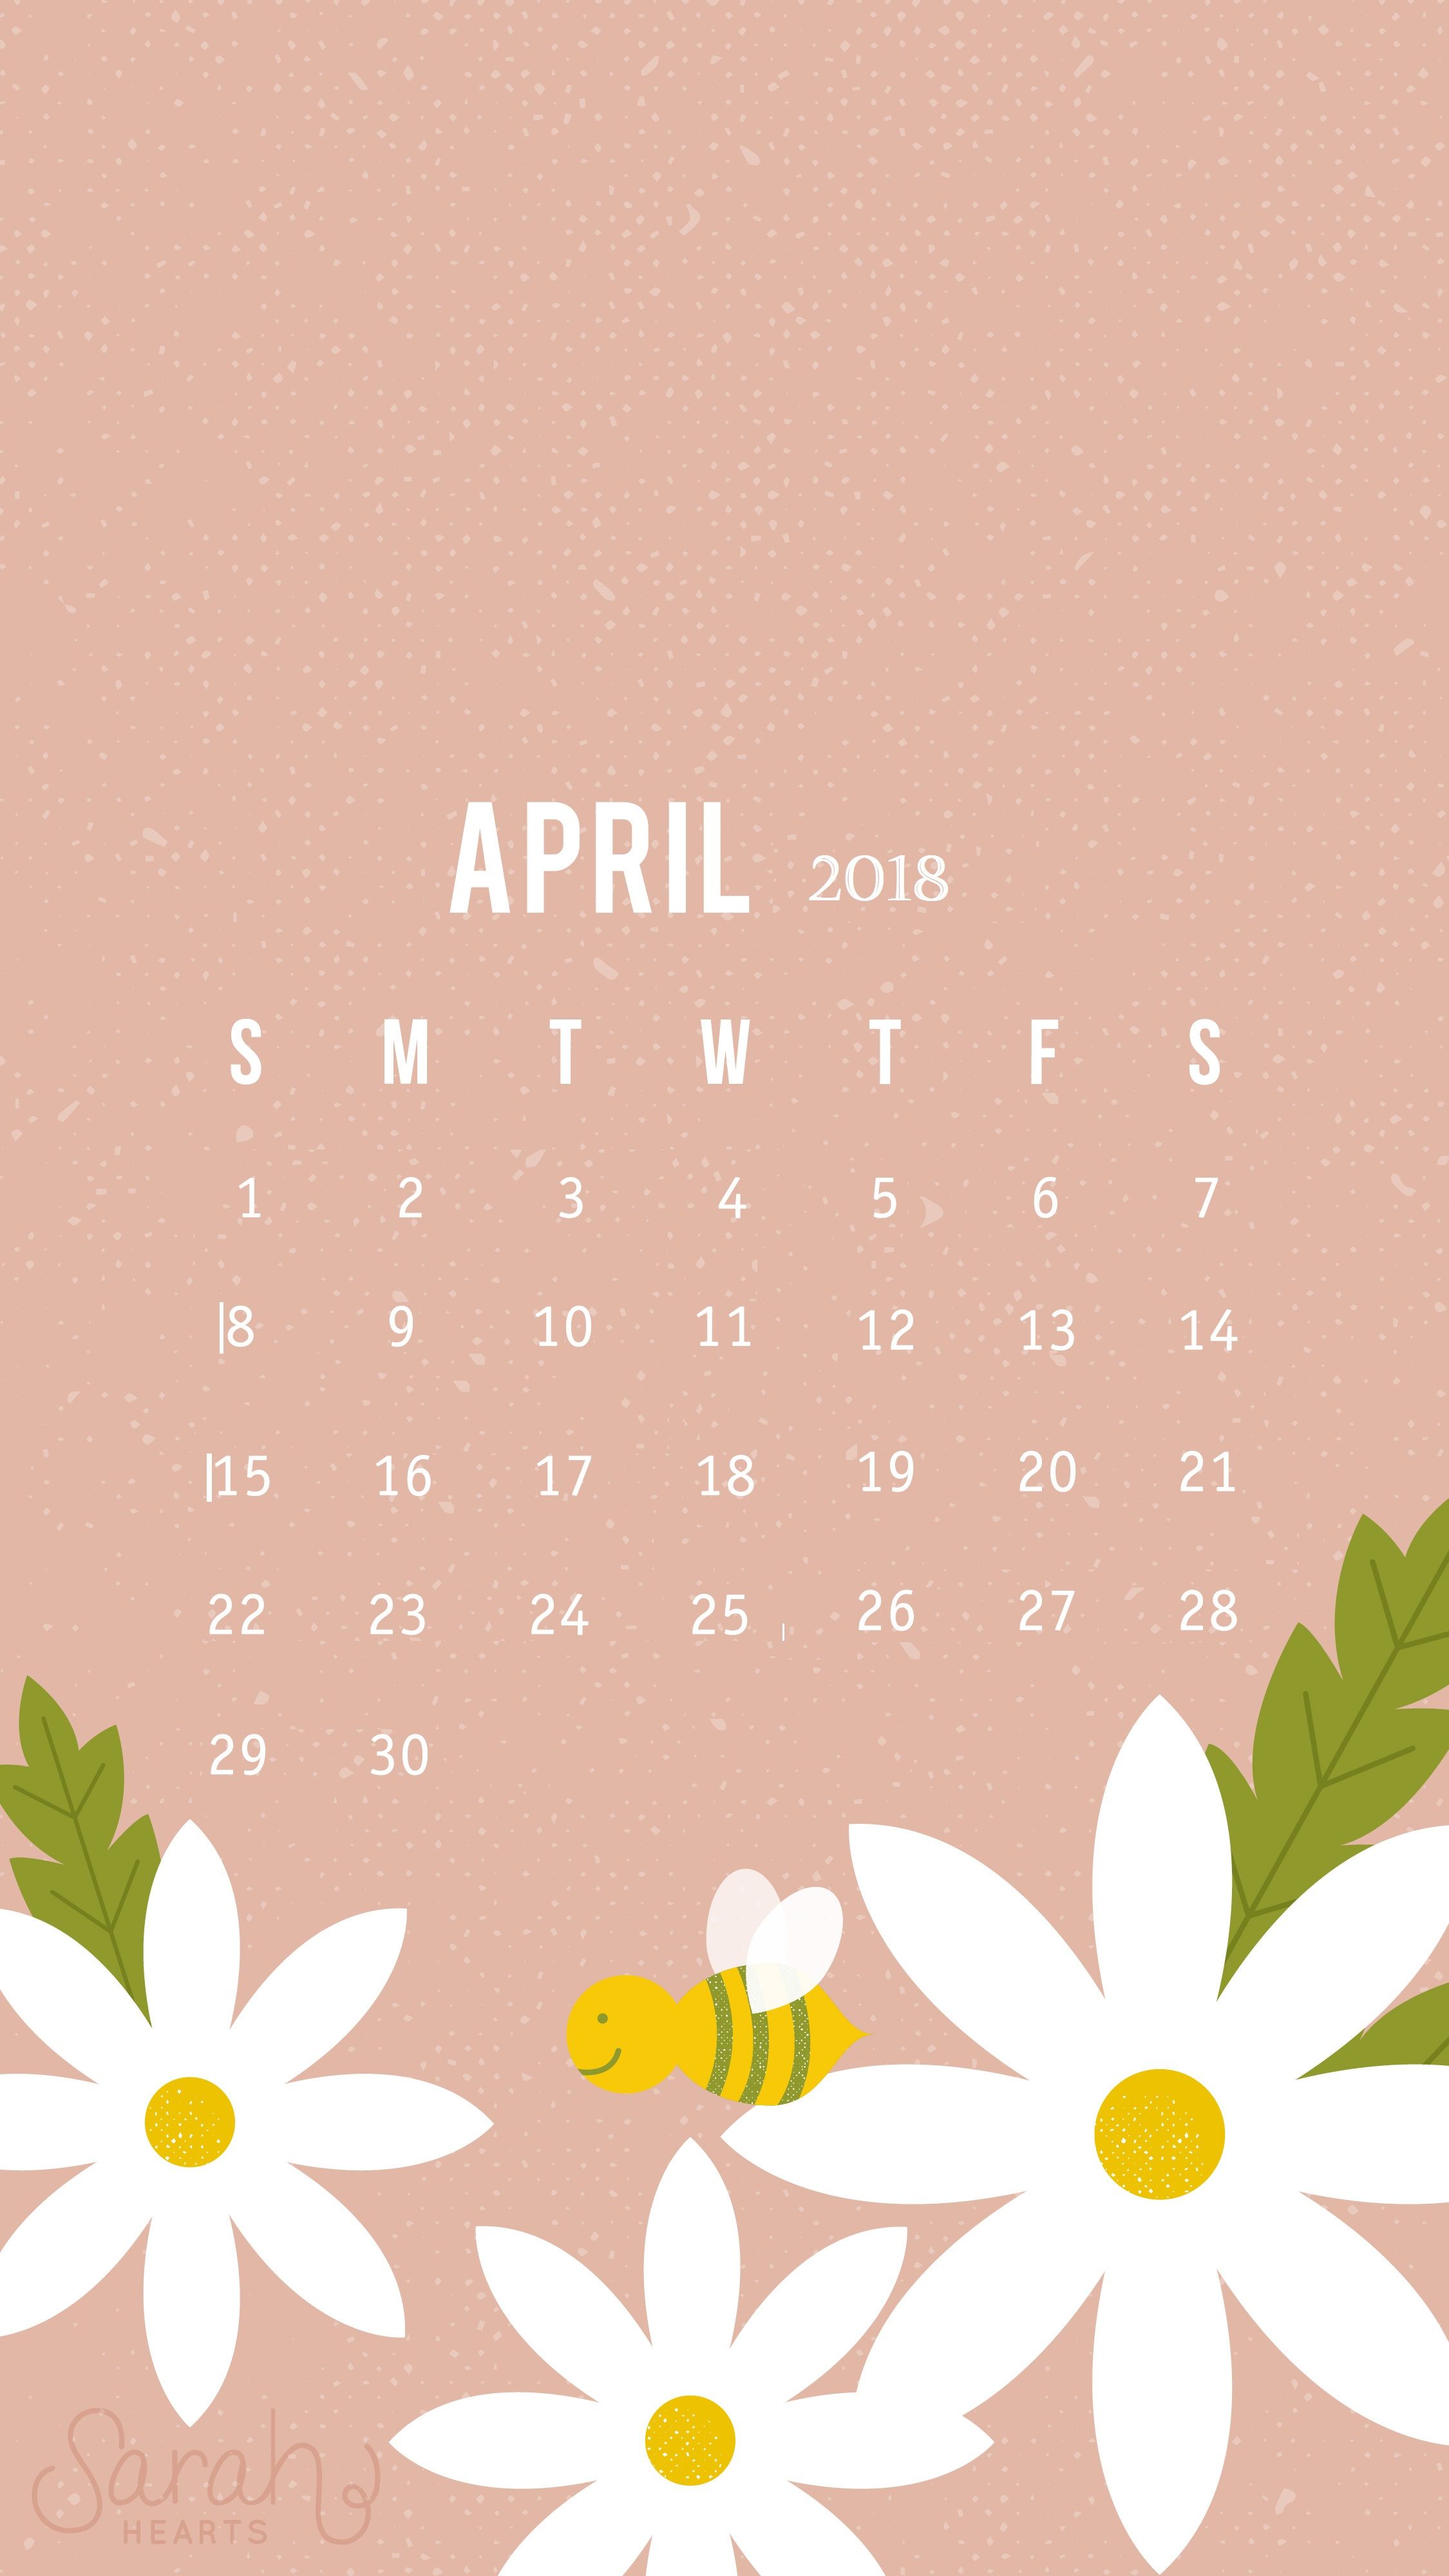 Cute April 2018 iPhone Calendar Wallpaper Calendar 2018 2250x4000